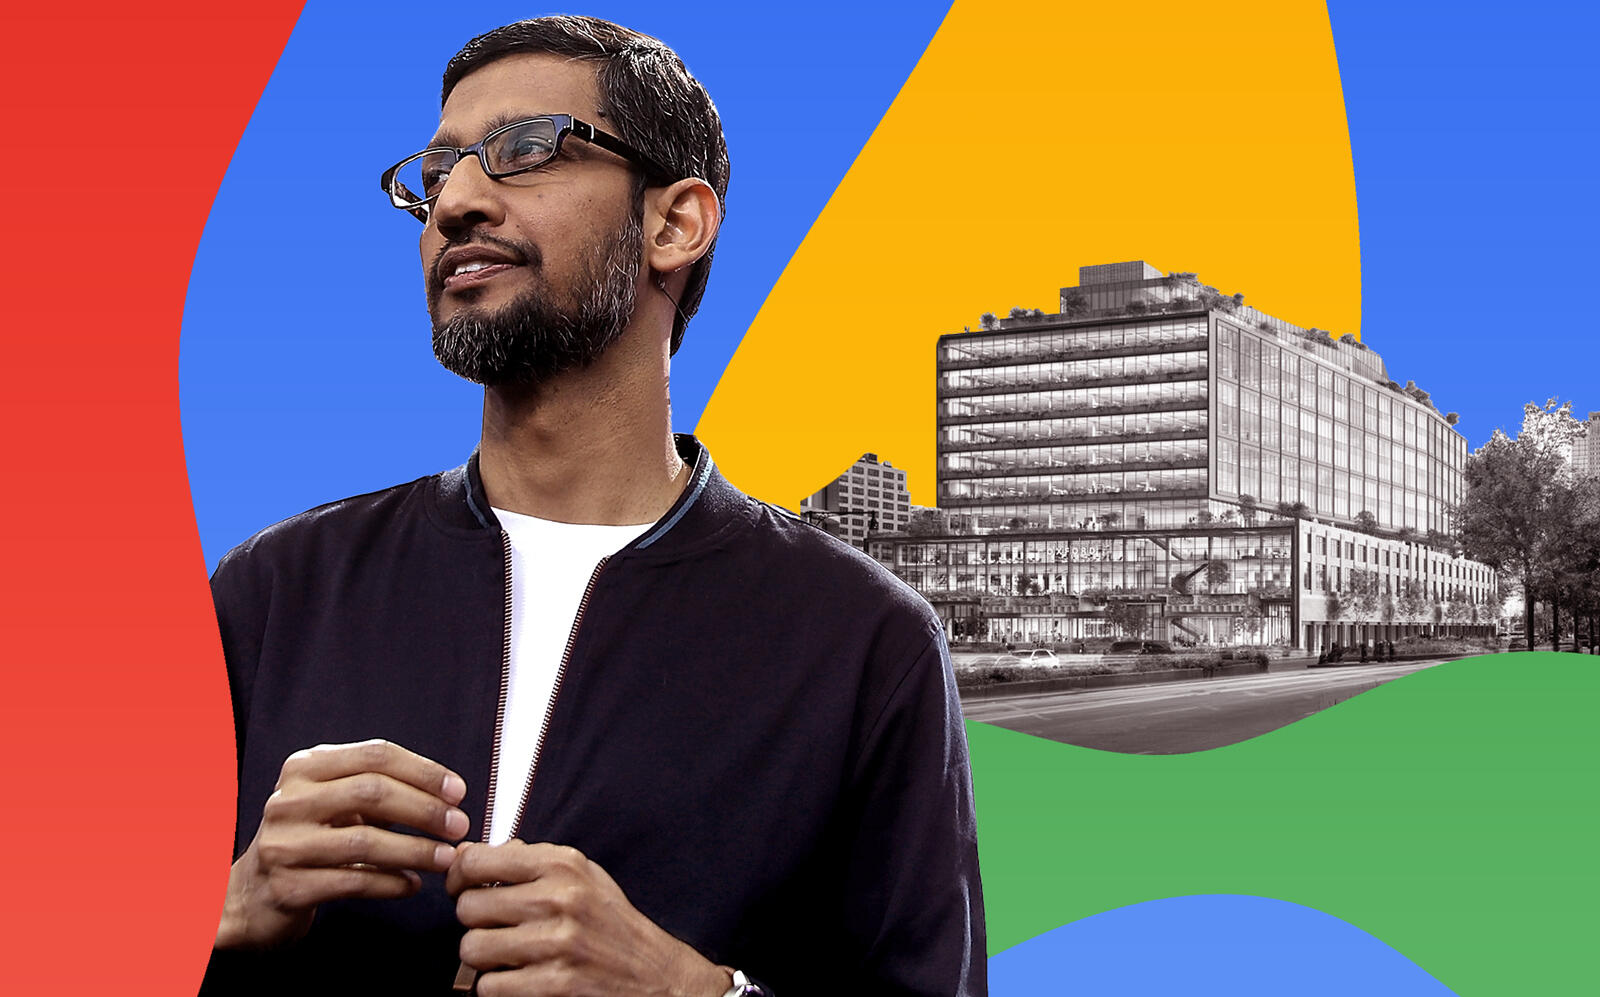 Google CEO Sundar Pichai and St. John’s Terminal at 500 Washington Street (Getty, COOKFOX Architects)